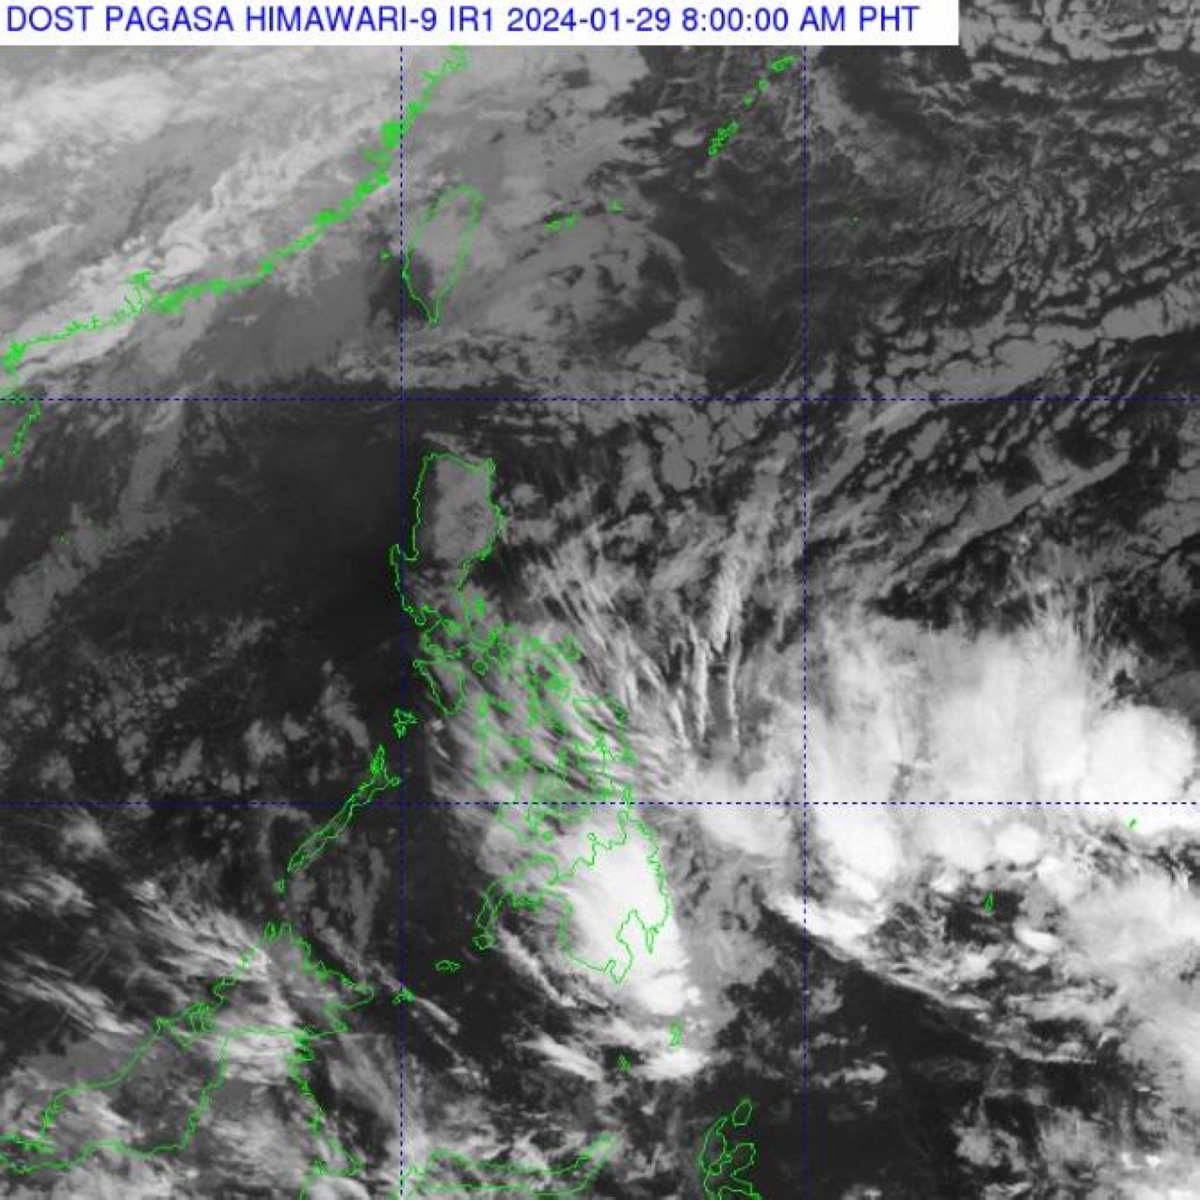 caraga, davao region to have rain showers, thunderstorms